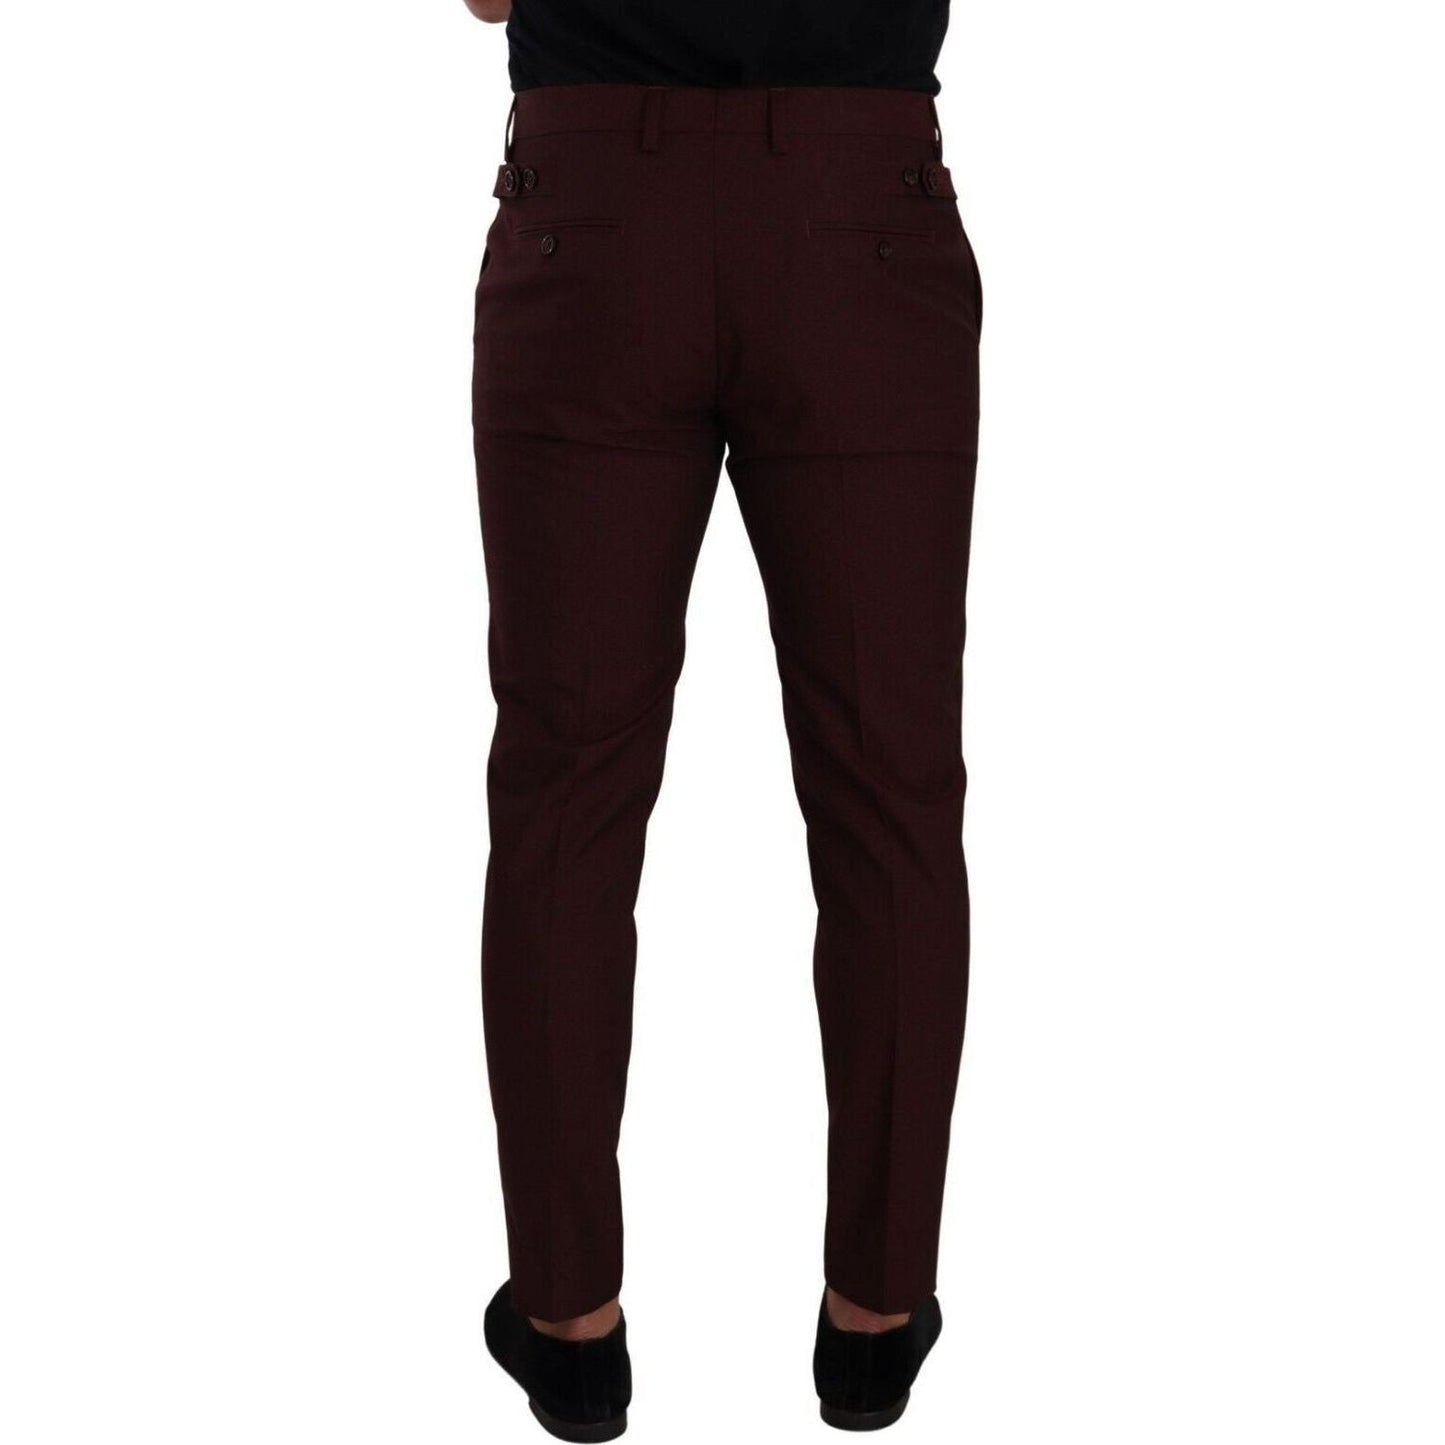 Dolce & Gabbana Maroon Slim Fit Dress Pants maroon-bordeaux-skinny-slim-trouser-pants s-l1600-2-177-382b0af9-2e7.jpg